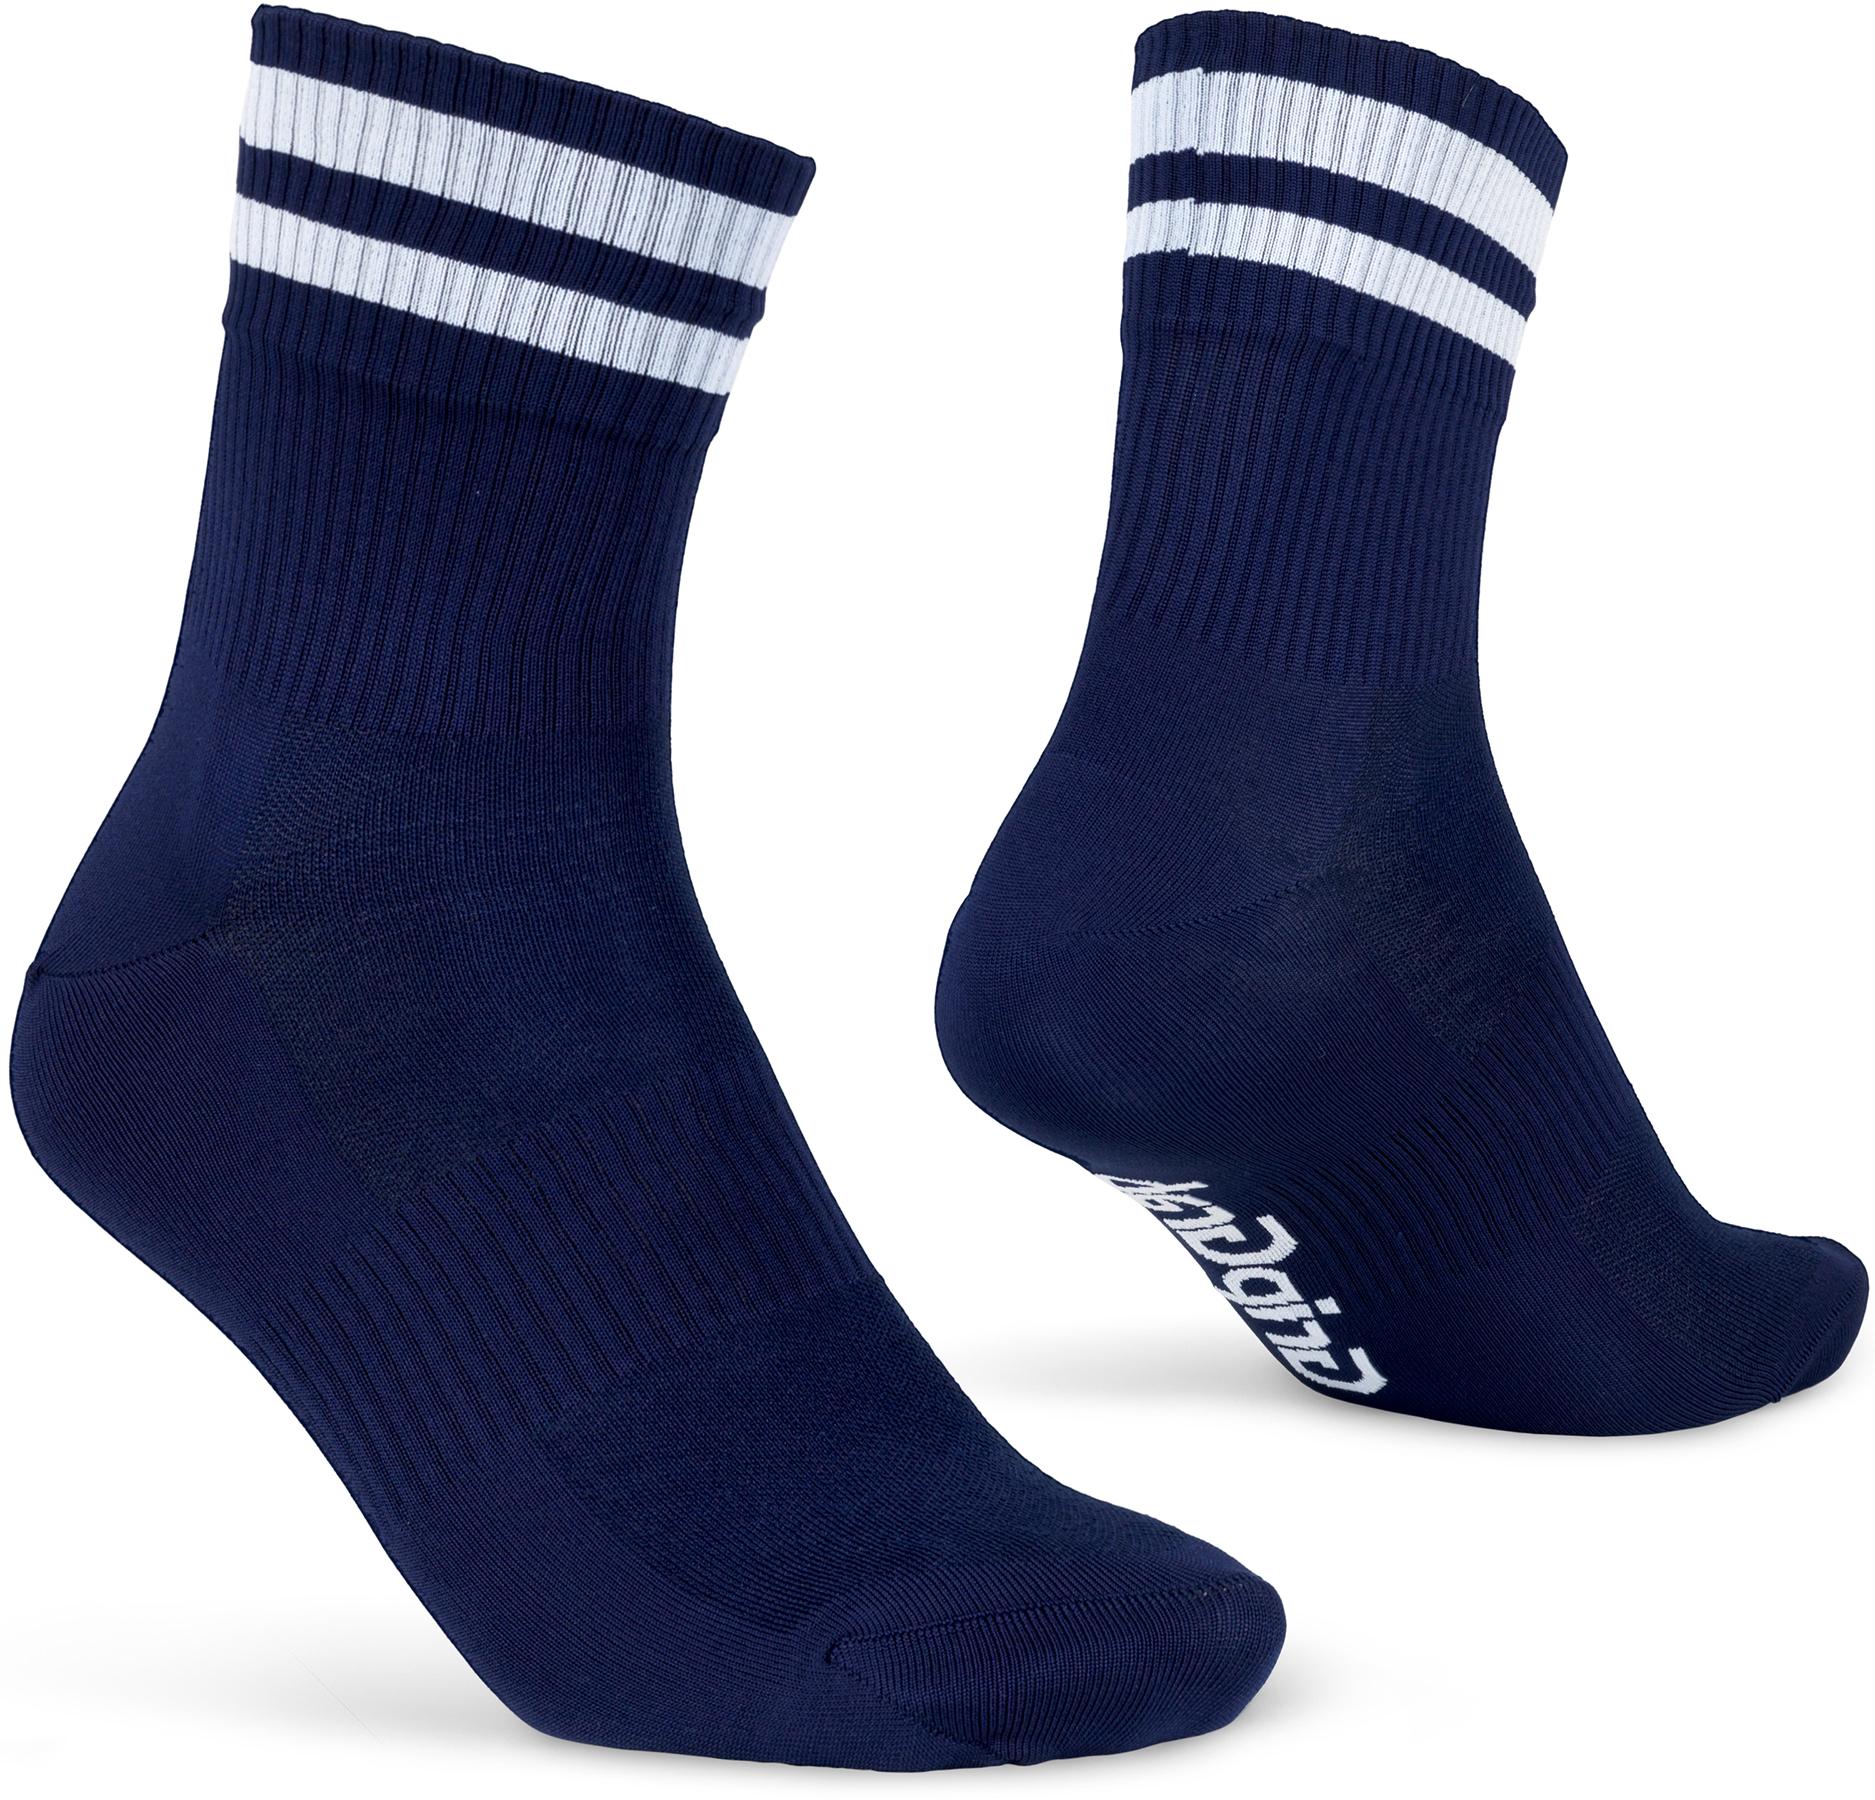 Gripgrab Original Stripes Crew Socks - Navy Blue